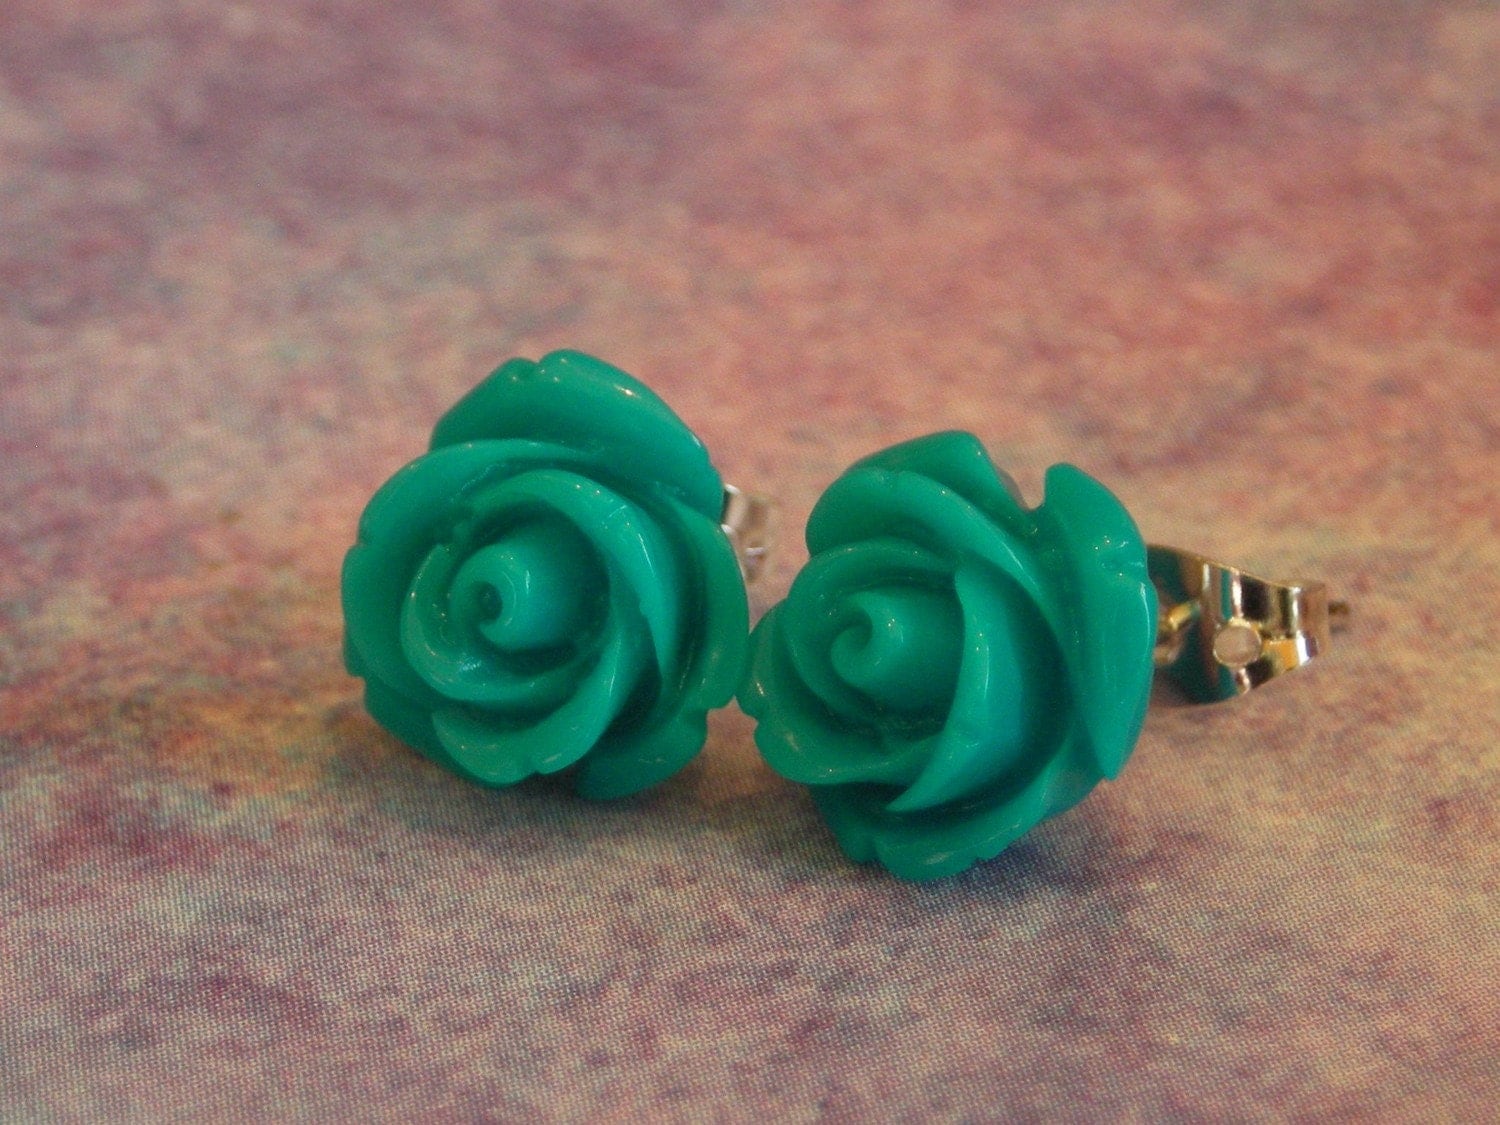 Turquoise rose earrings 10mm